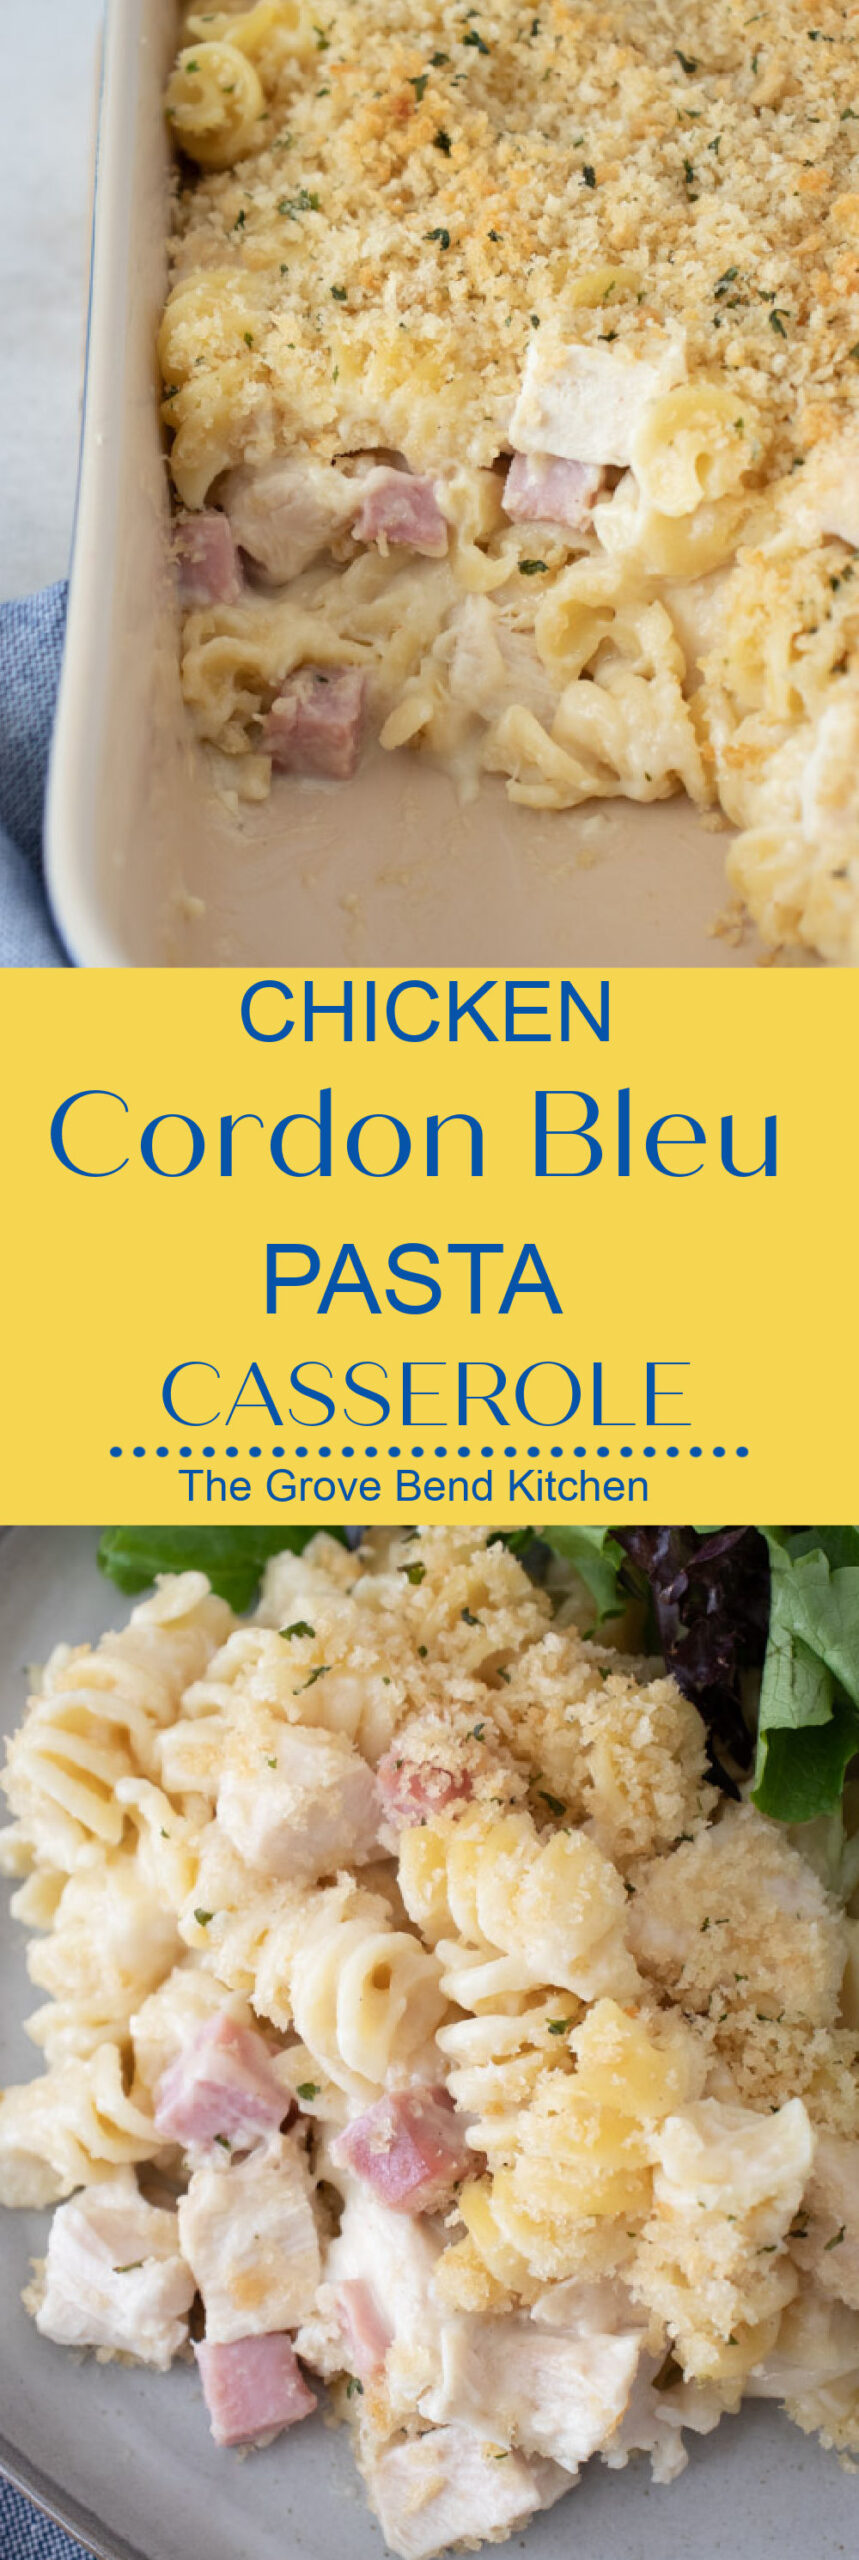 Chicken Cordon Bleu Pasta Casserole - The Grove Bend Kitchen